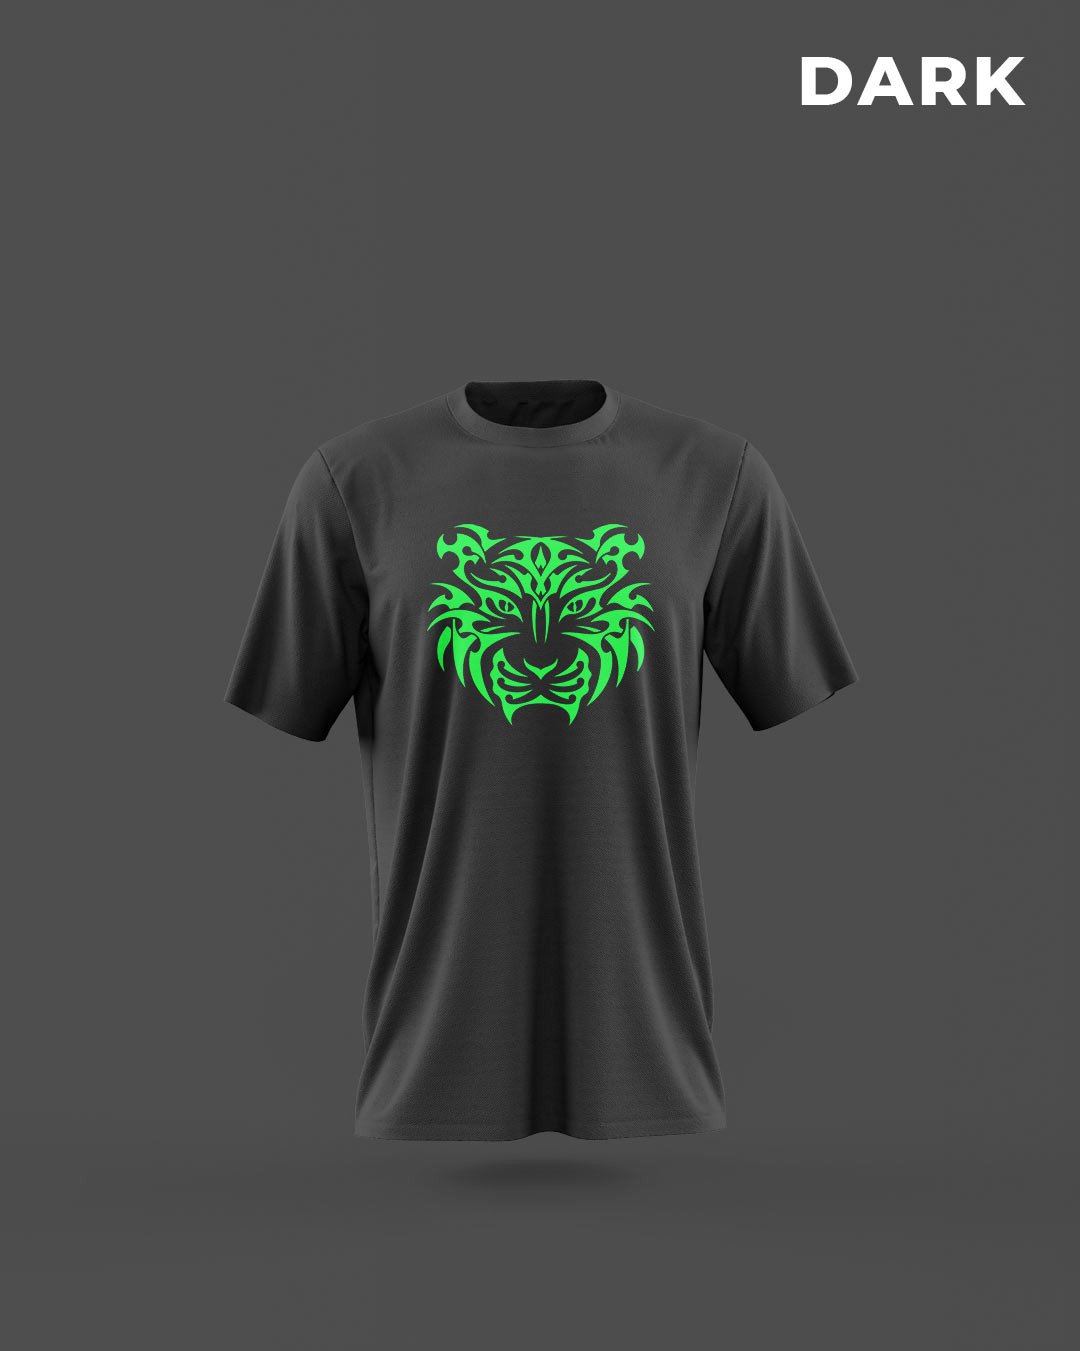 TeesWarrior Tiger Printed Glow in Dark Graphic Printed 100% Cotton T-Shirt – Regular Fit, Round Neck, Half Sleeves